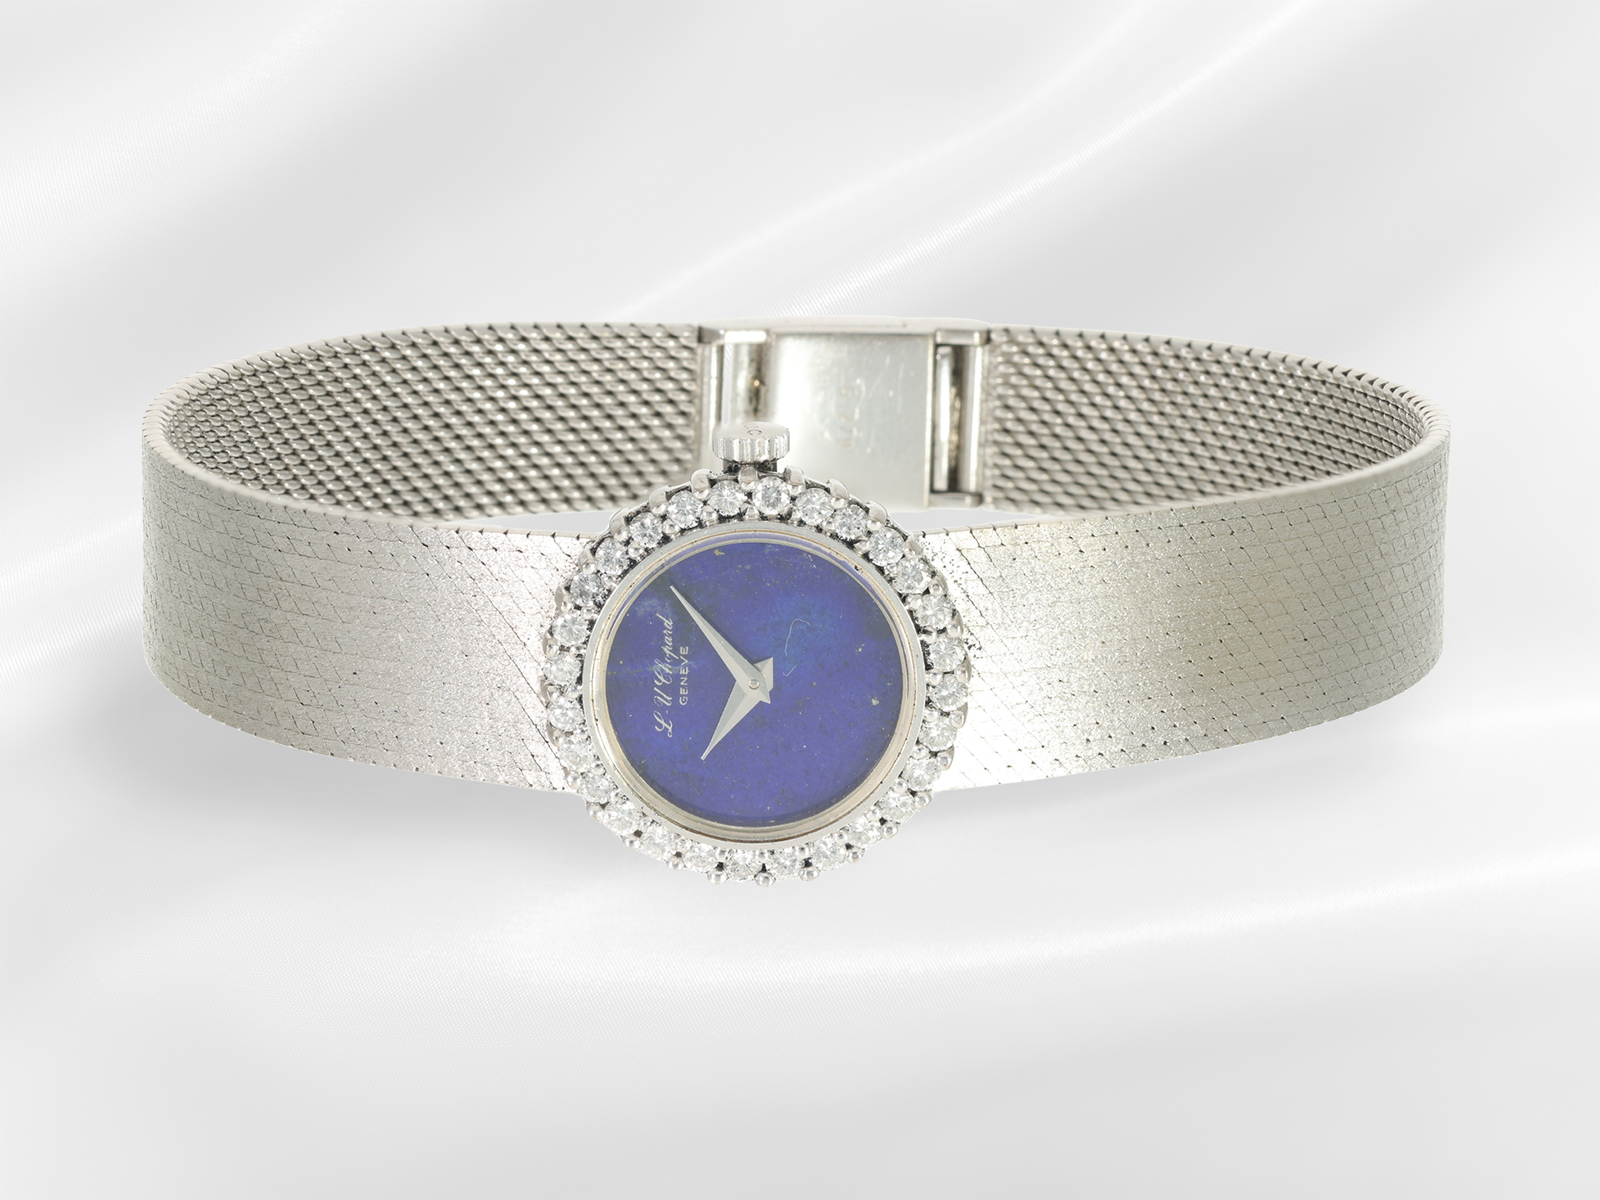 Wristwatch: luxurious ladies' watch by Chopard with brilliant-cut diamond bezel and lapis lazuli dia - Image 2 of 4